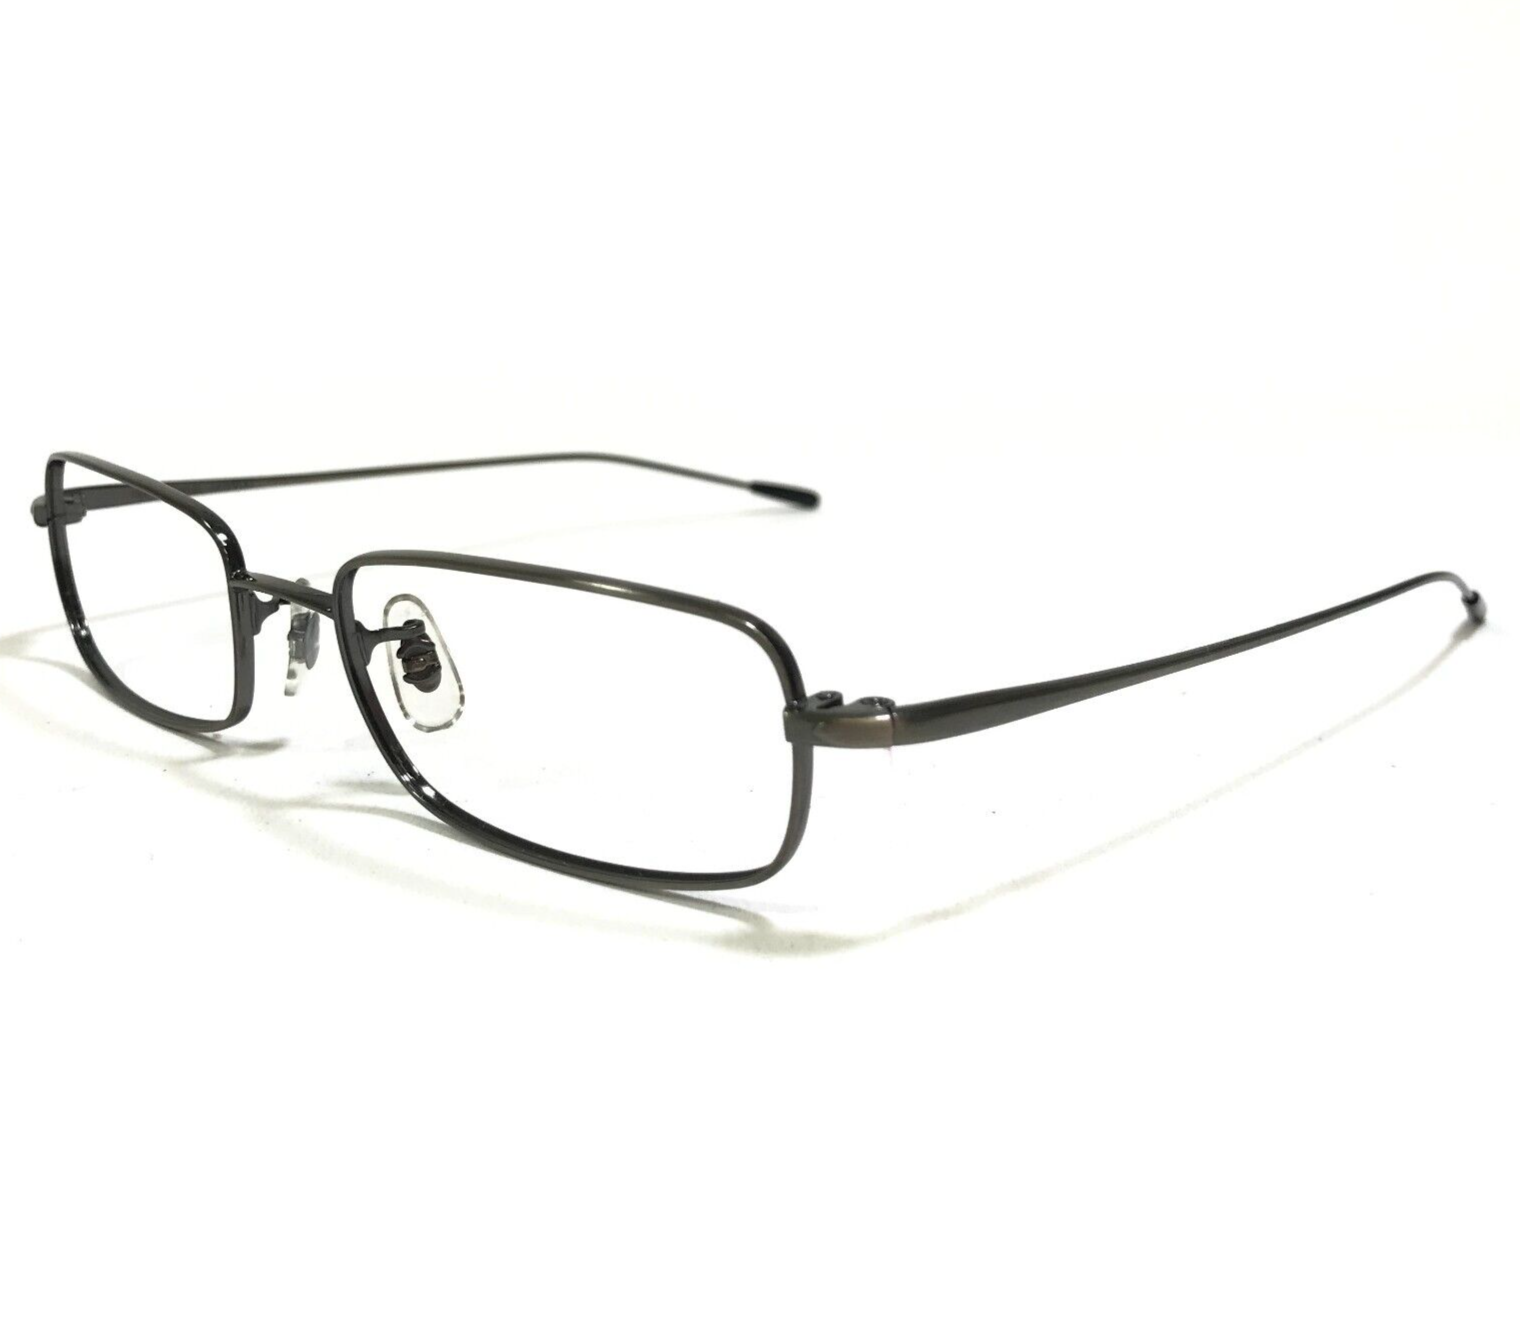 Primary image for Oliver Peoples Eyeglasses Frames OP-644 P Pewter Gray Rectangular 49-18-135